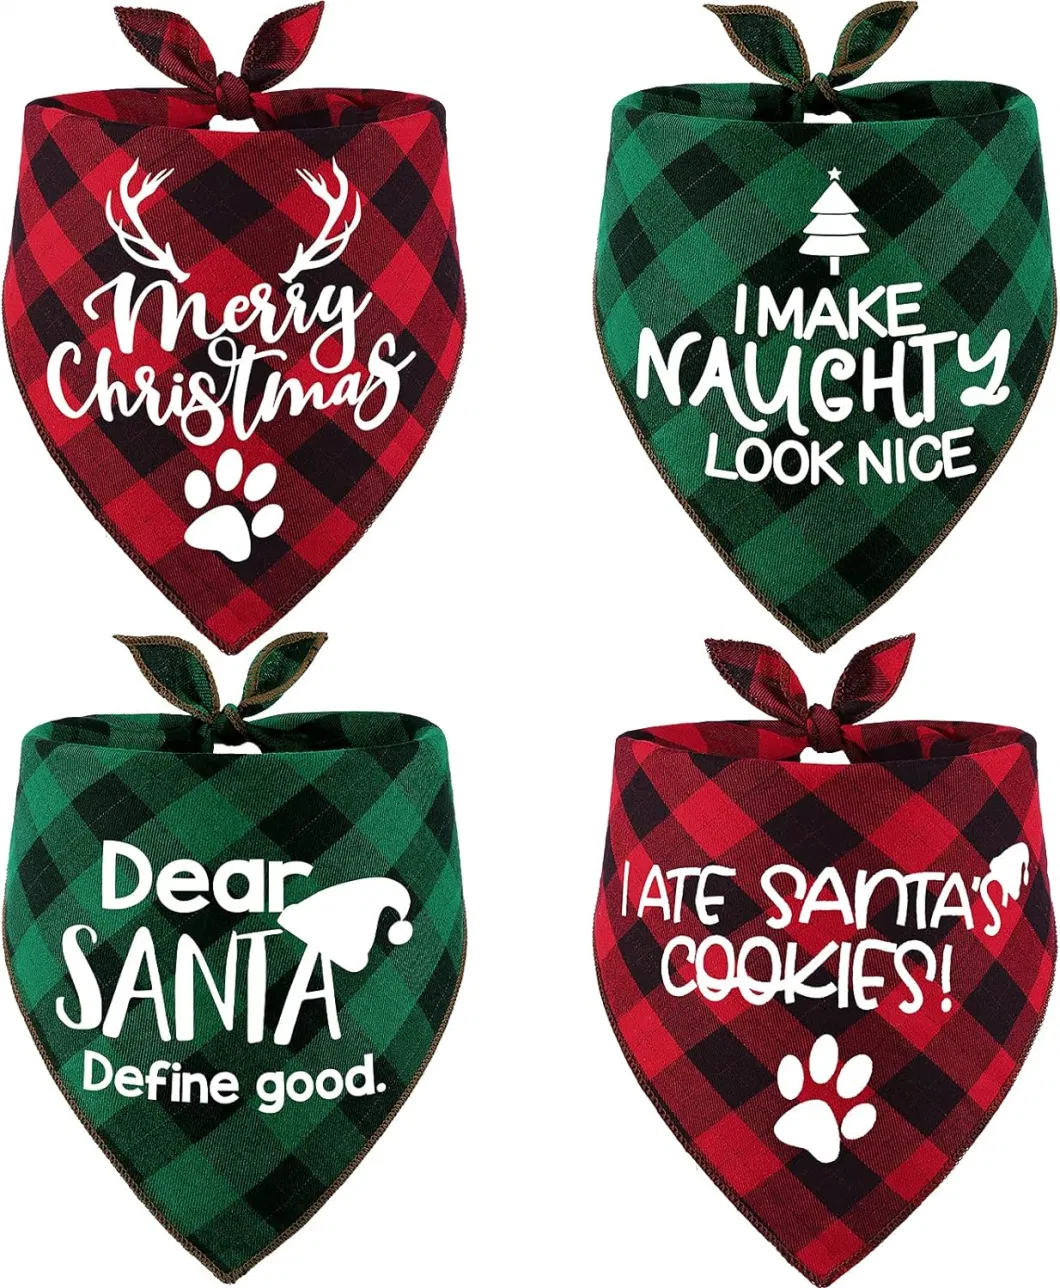 Merry Christmas Dog Bandanas - Classic Triangle Fall Xmas Christmas Printing Dogs Red Plaid Scarf